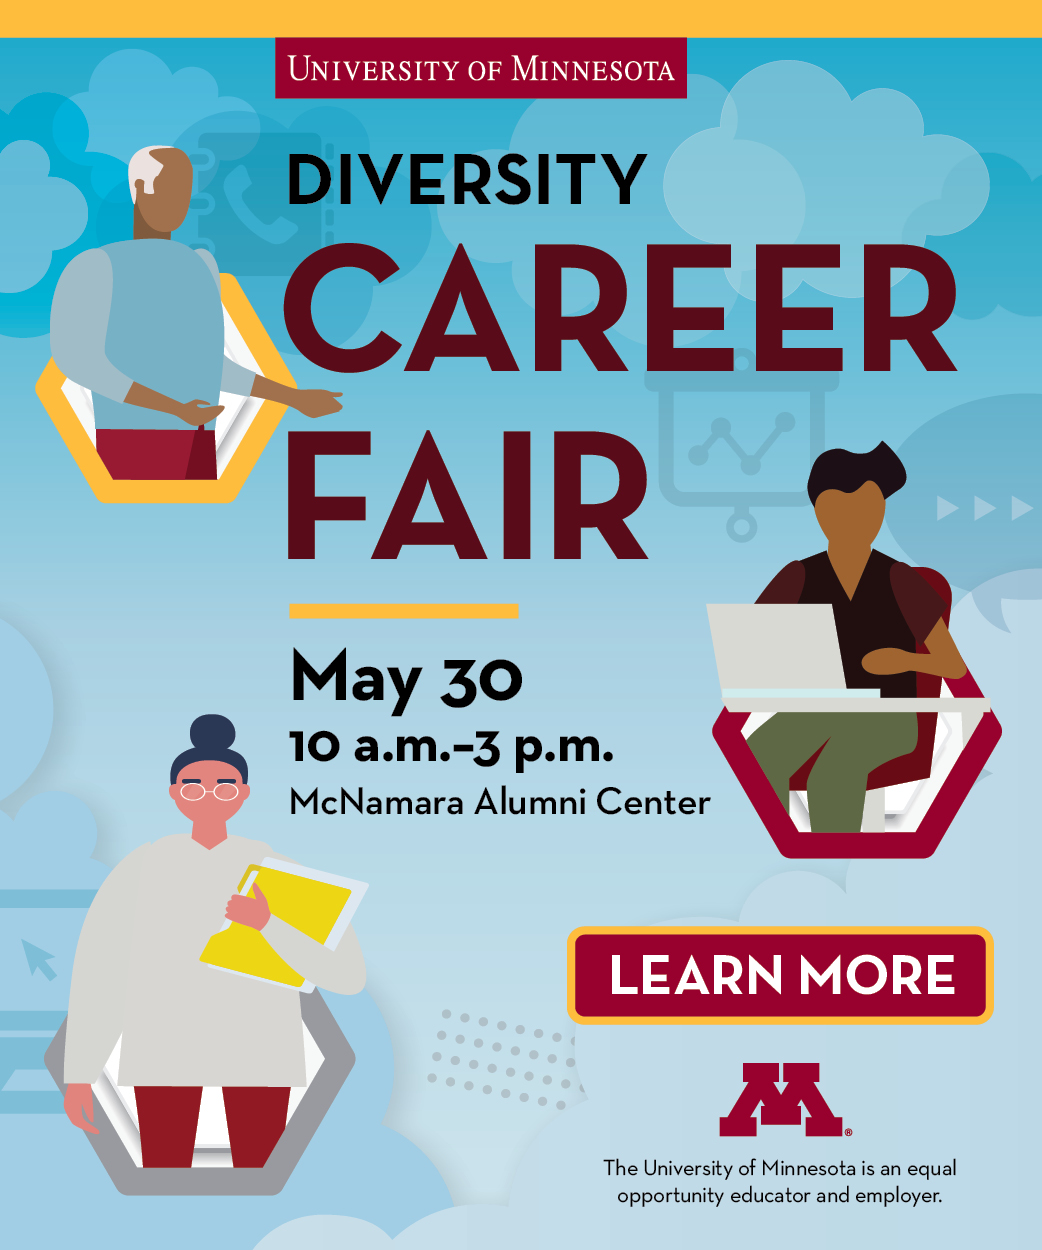 Diversity Career Fair, May 30, 10 a.m.-3 p.m., McNamara Alumni Center, Learn more